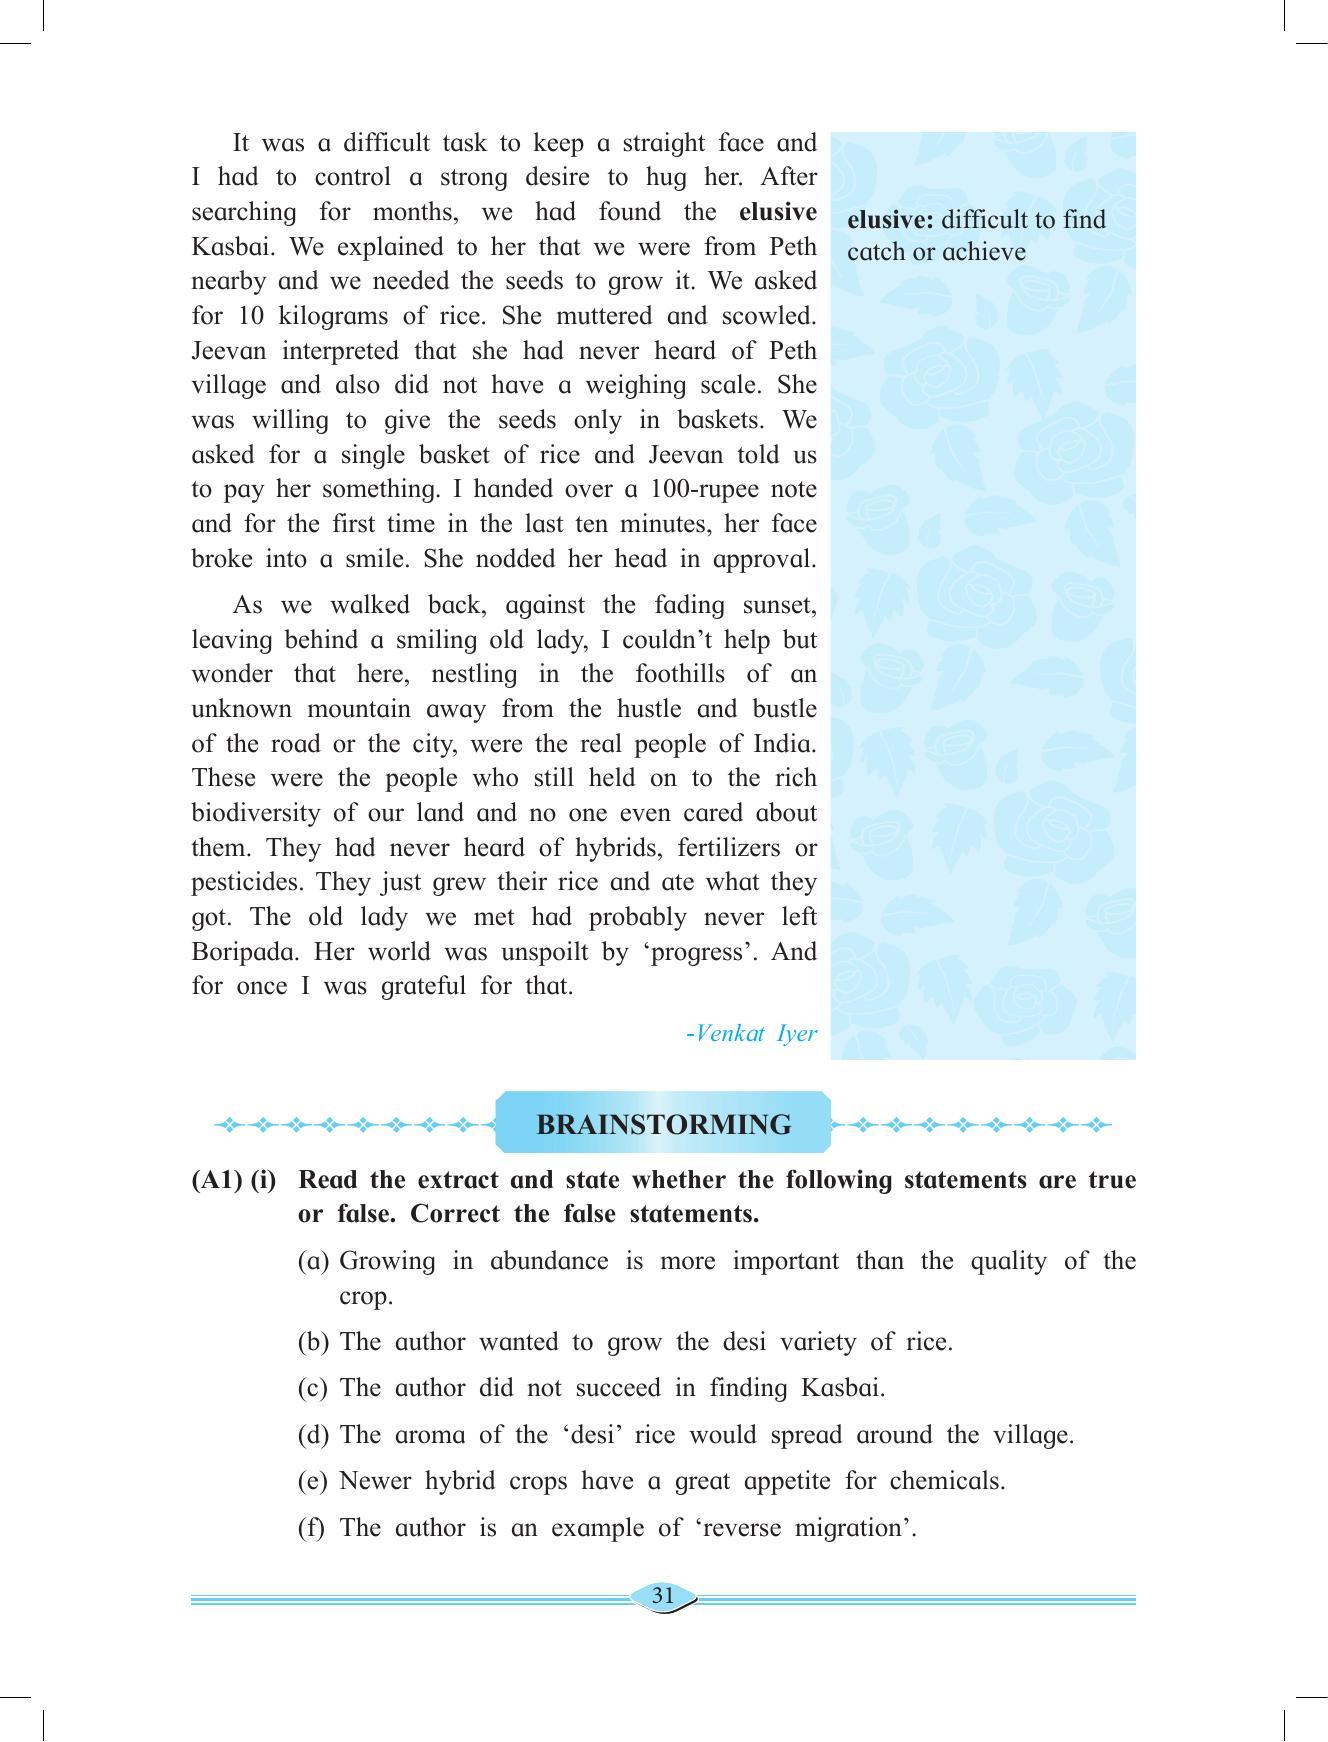 Maharashtra Board Class 11 English Textbook - Page 45